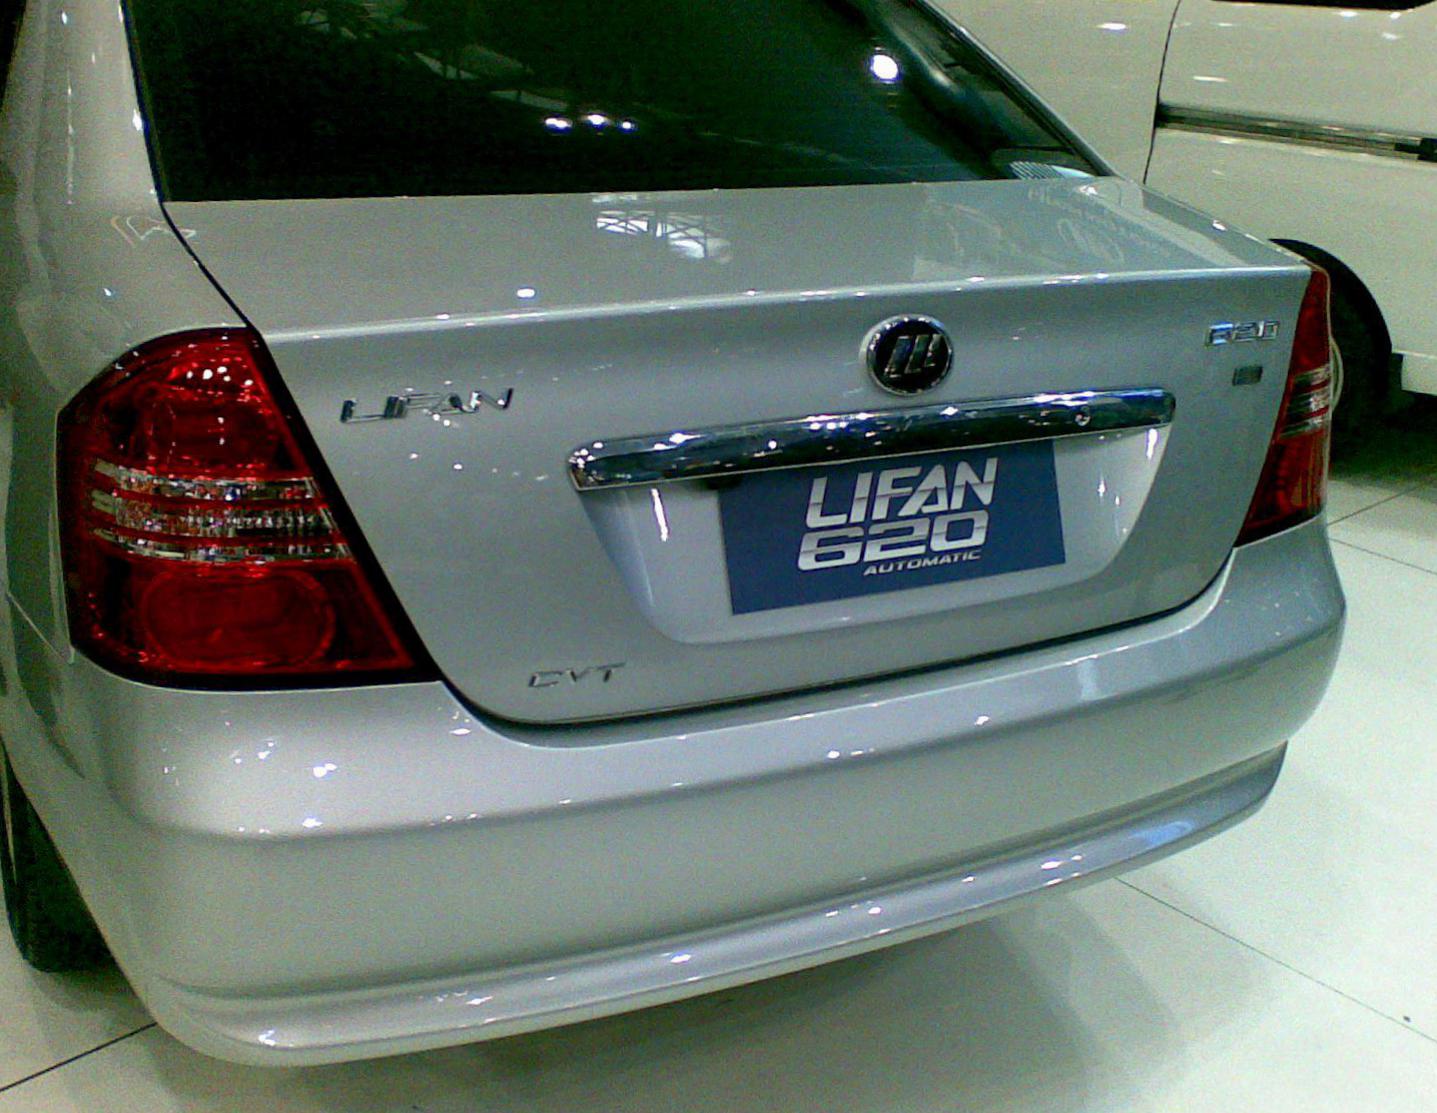 Lifan 520 configuration 2013